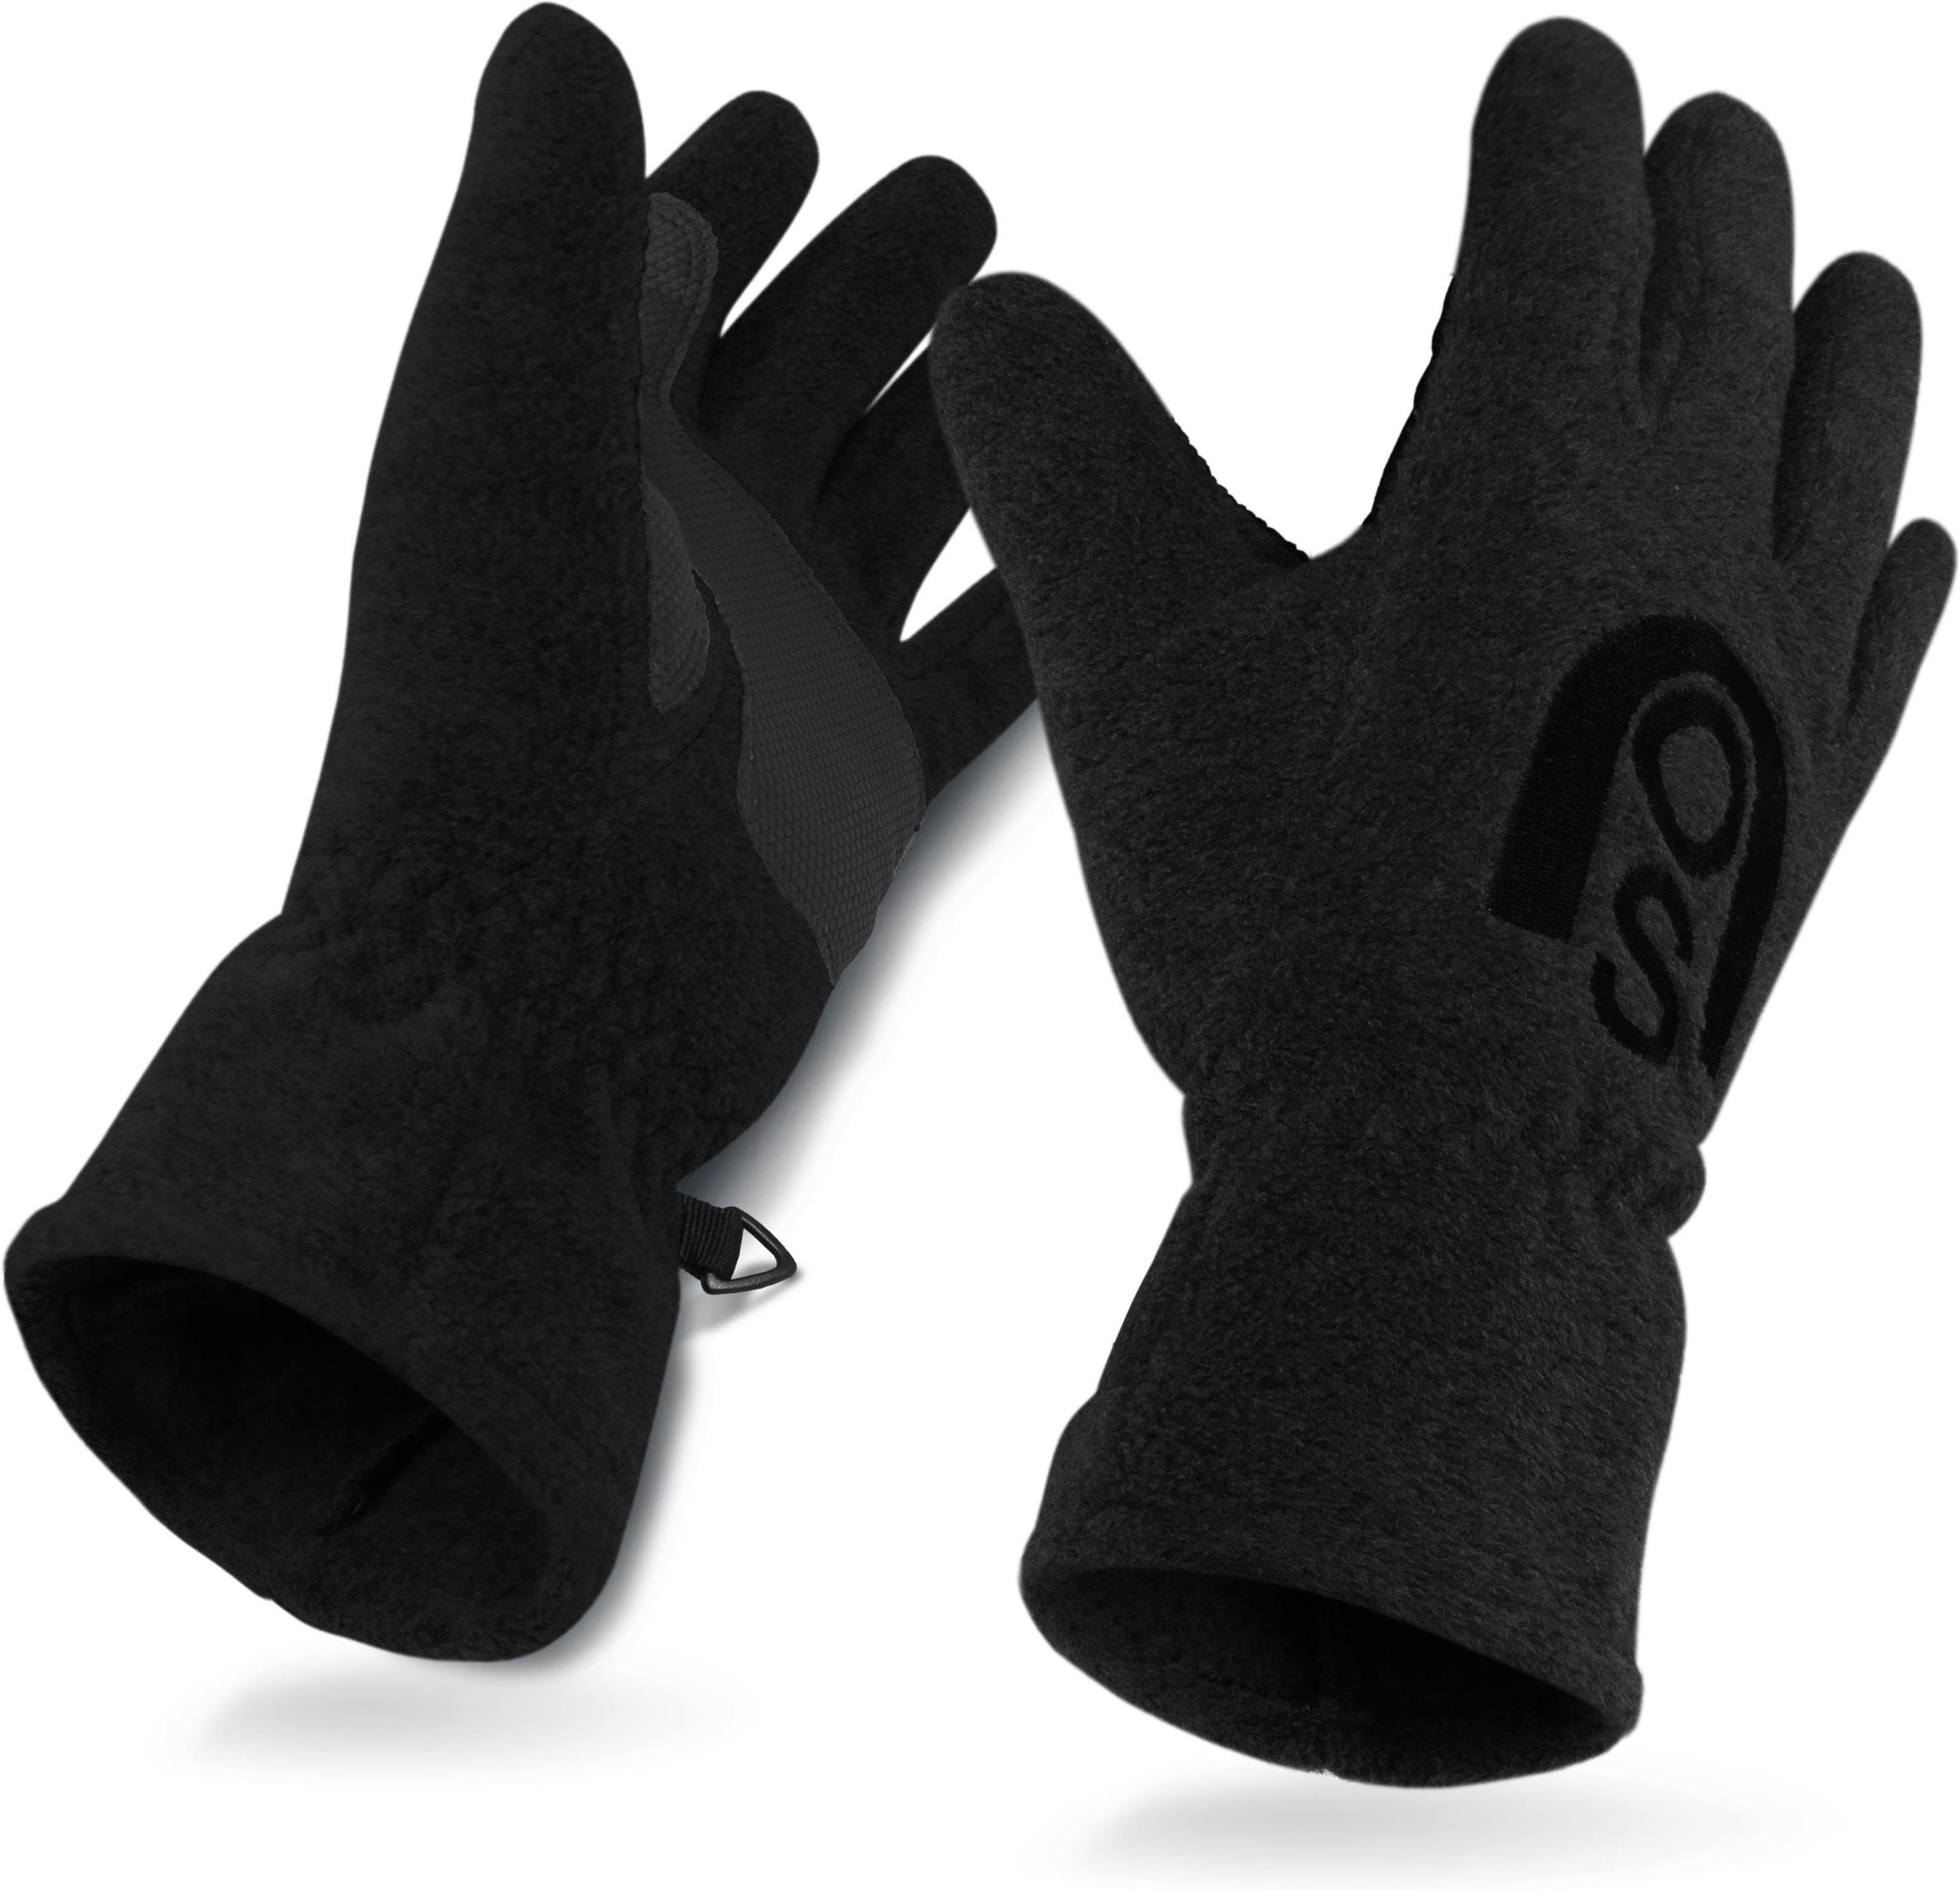 Handschuhe normani Fleecefütterung Winterhandschuhe Outdoor mit Skihandschuhe Damen Herren Fleece Übergangshandschuhe Handschuhe Schwarz und Nuuk für Thermohandschuhe